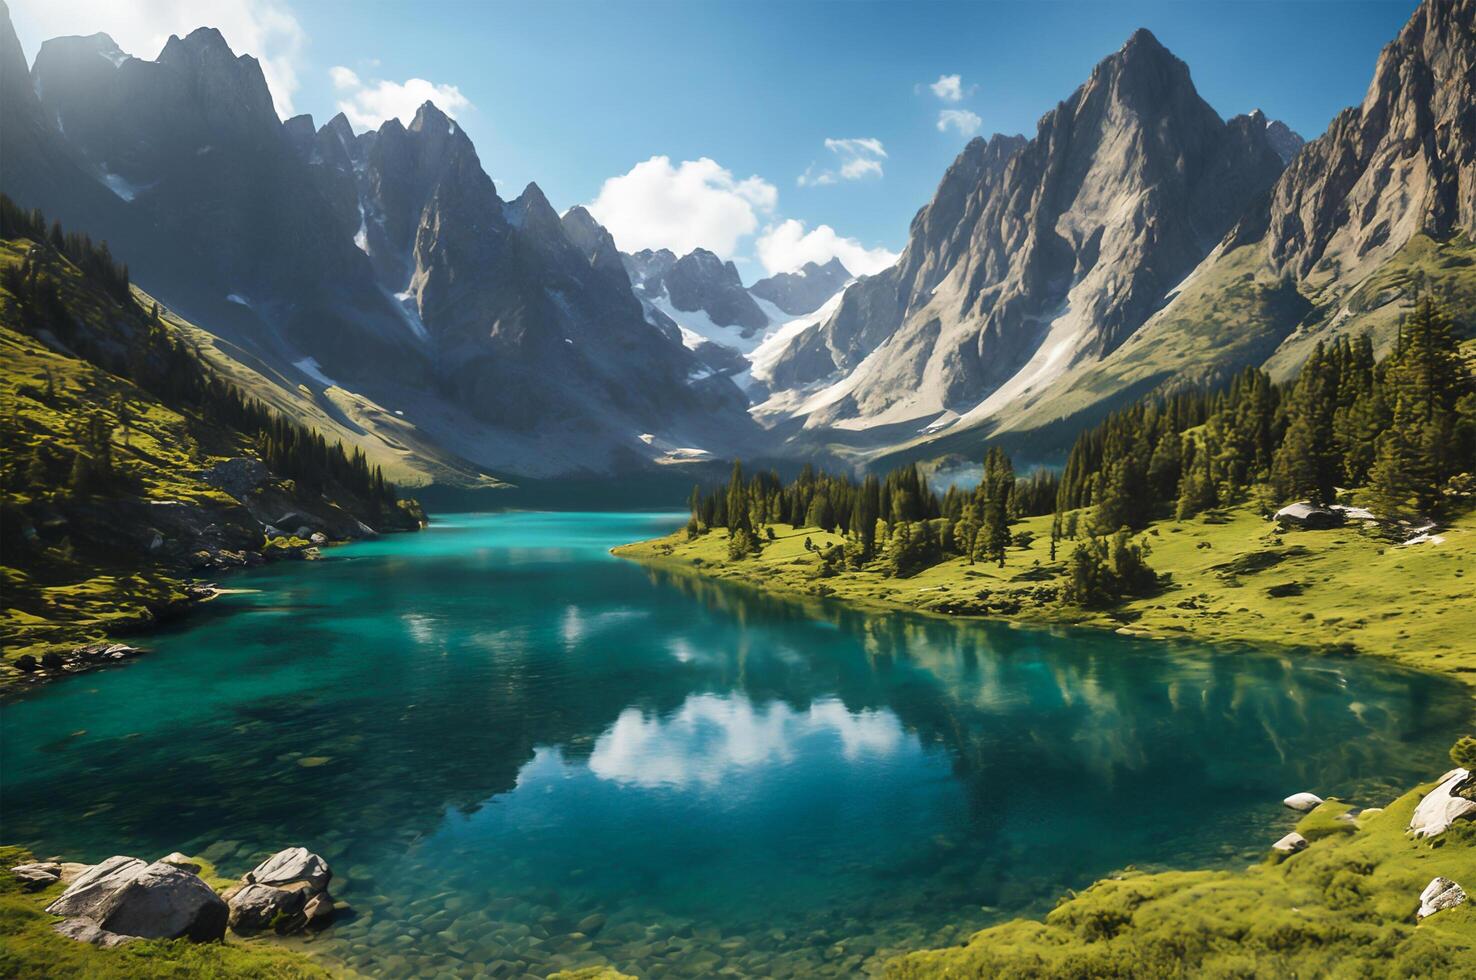 asombroso alpino paisaje cristal claro turquesa lago rodeado por majestuoso montaña picos y lozano verdor. hermosa montaña y lago paisaje foto